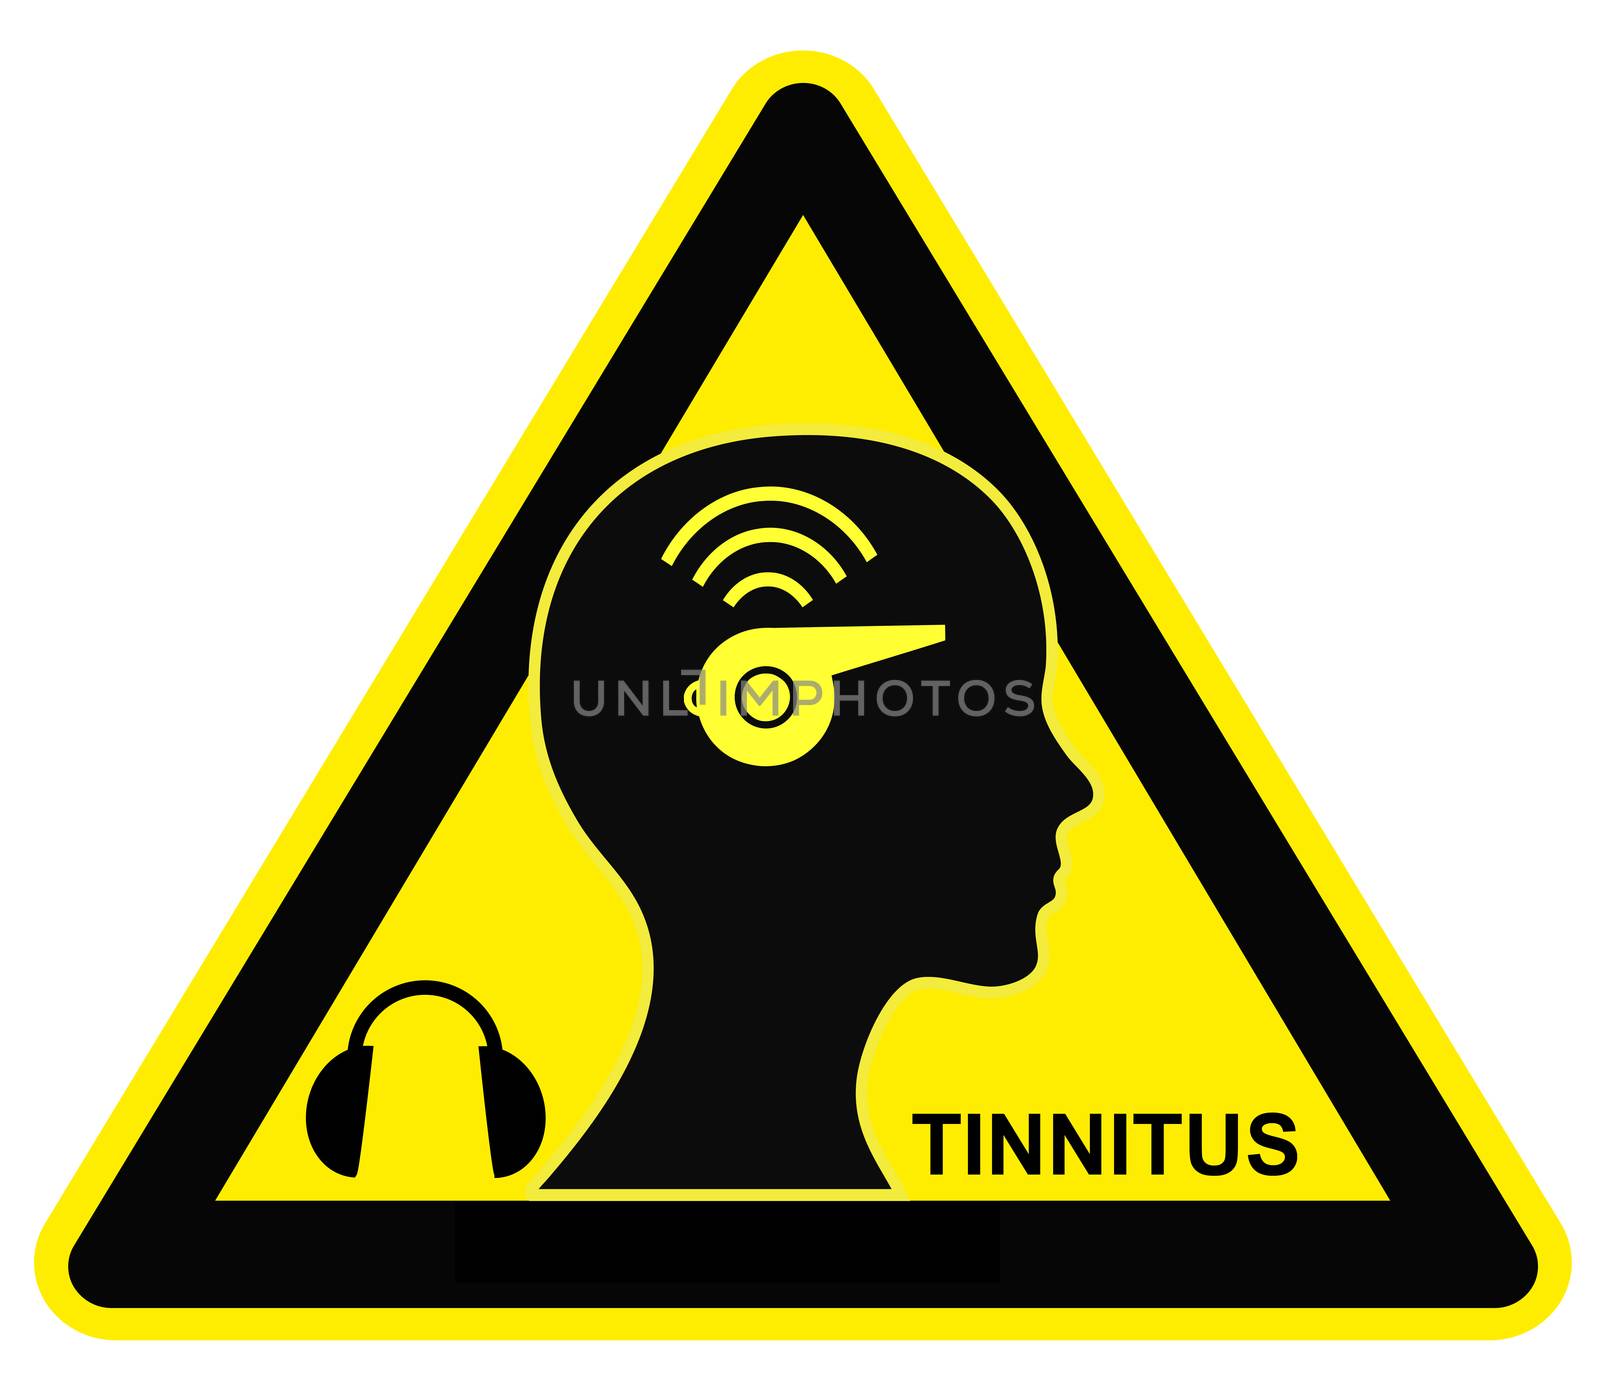 Caution Tinnitus by Bambara